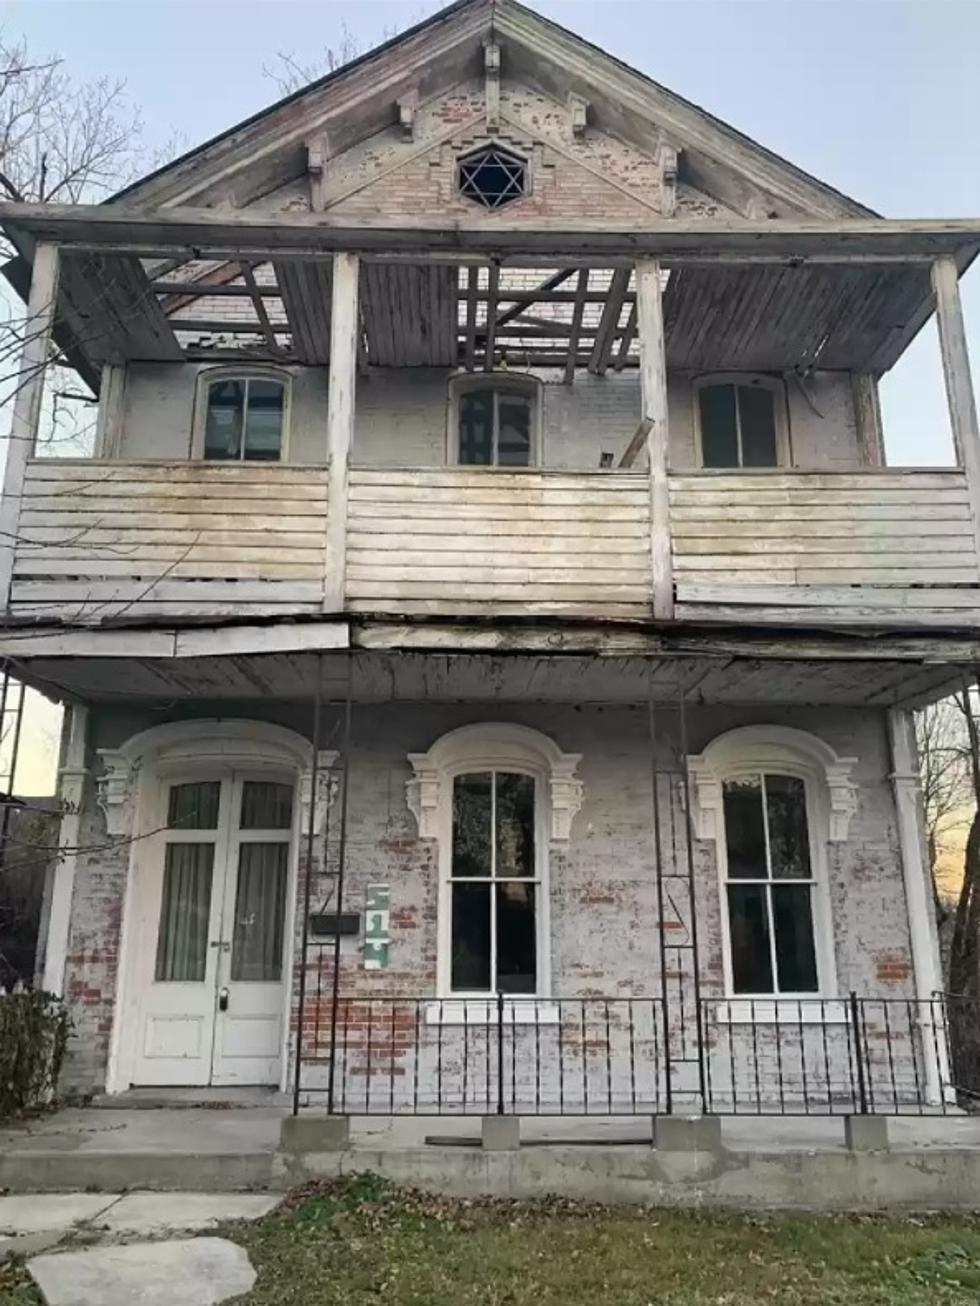 Hannibal Home Built in 1870 is Fixer Upper’s Dream or Scream?